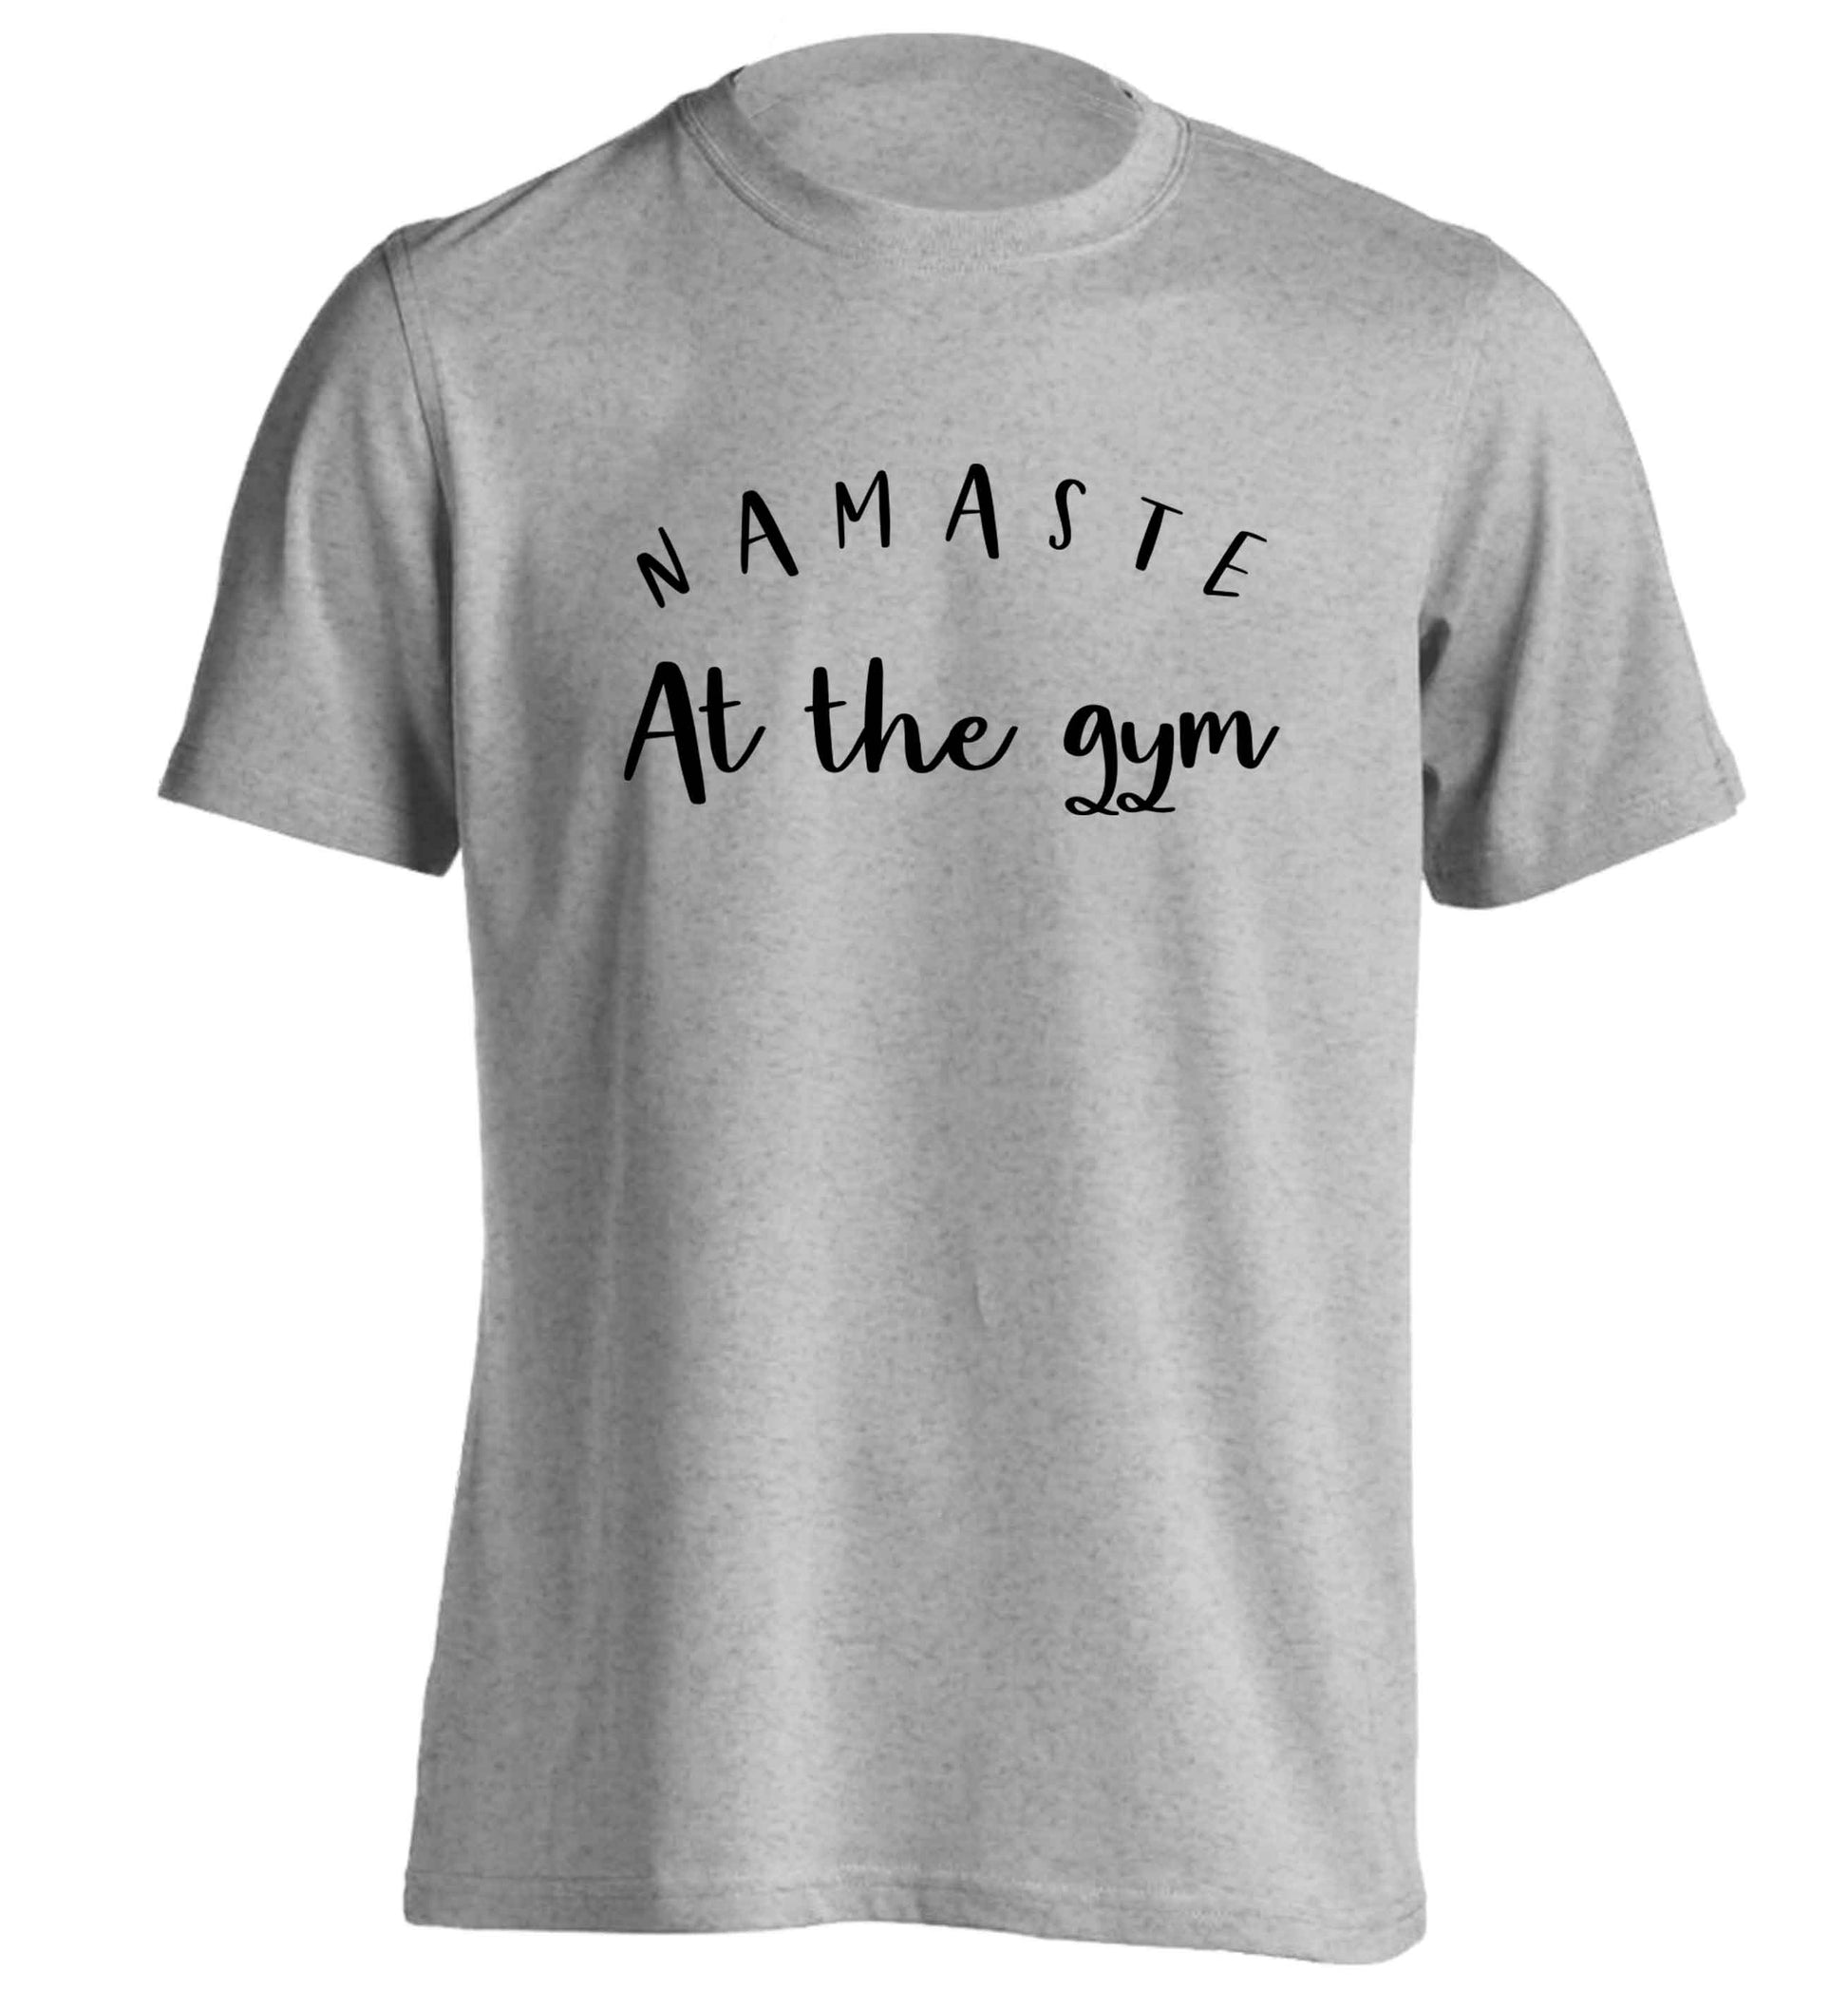 Namaste at the gym adults unisex grey Tshirt 2XL